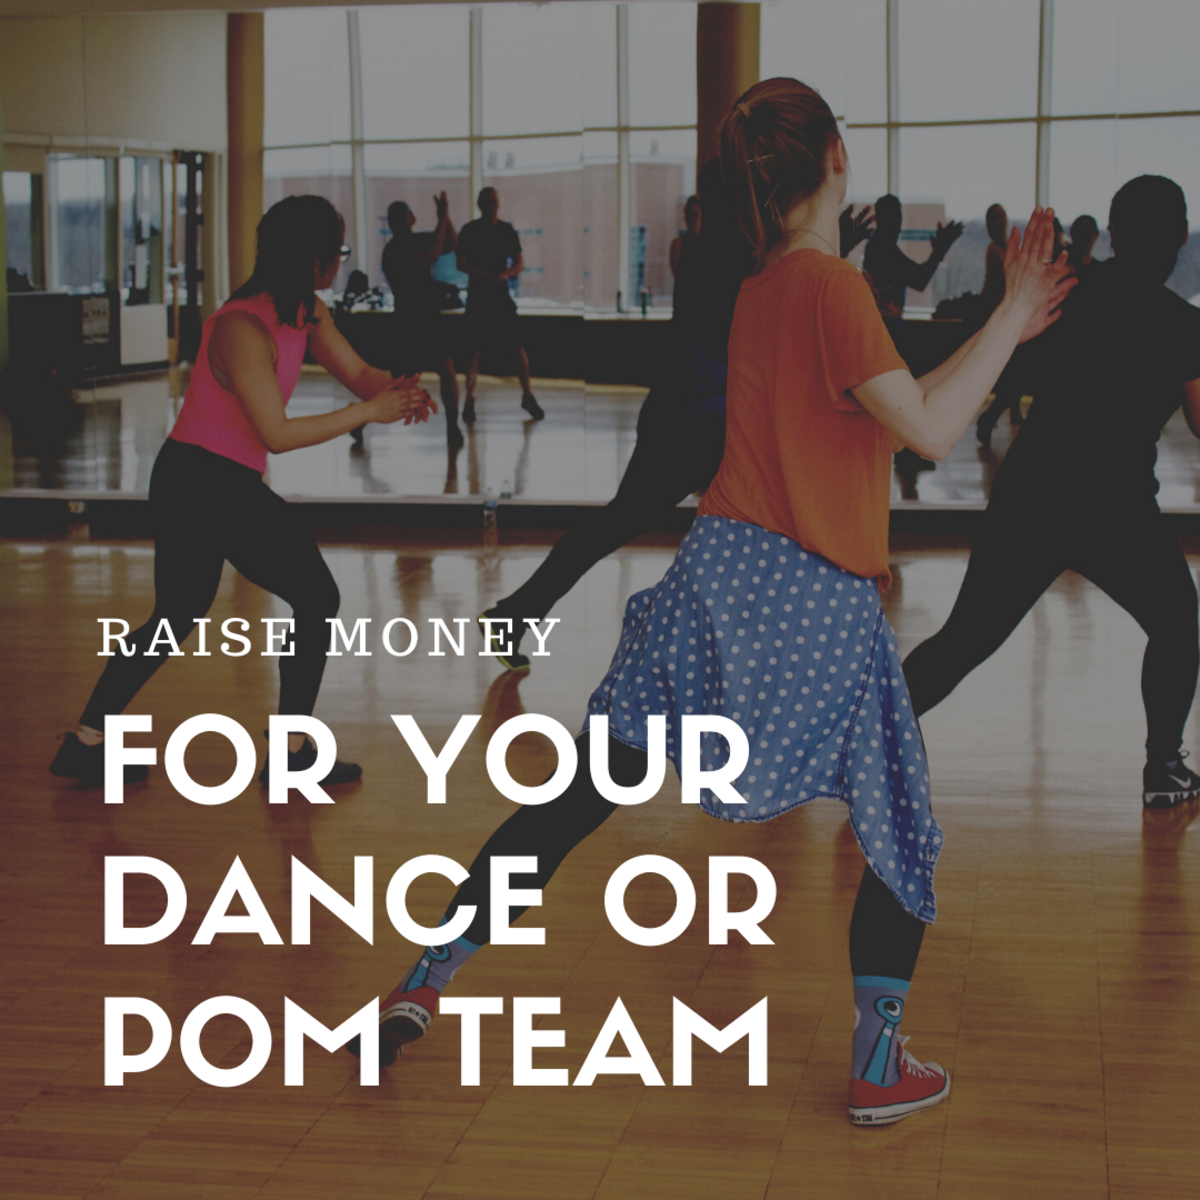 Creative Fundraising Ideas for a Dance or Pom Team